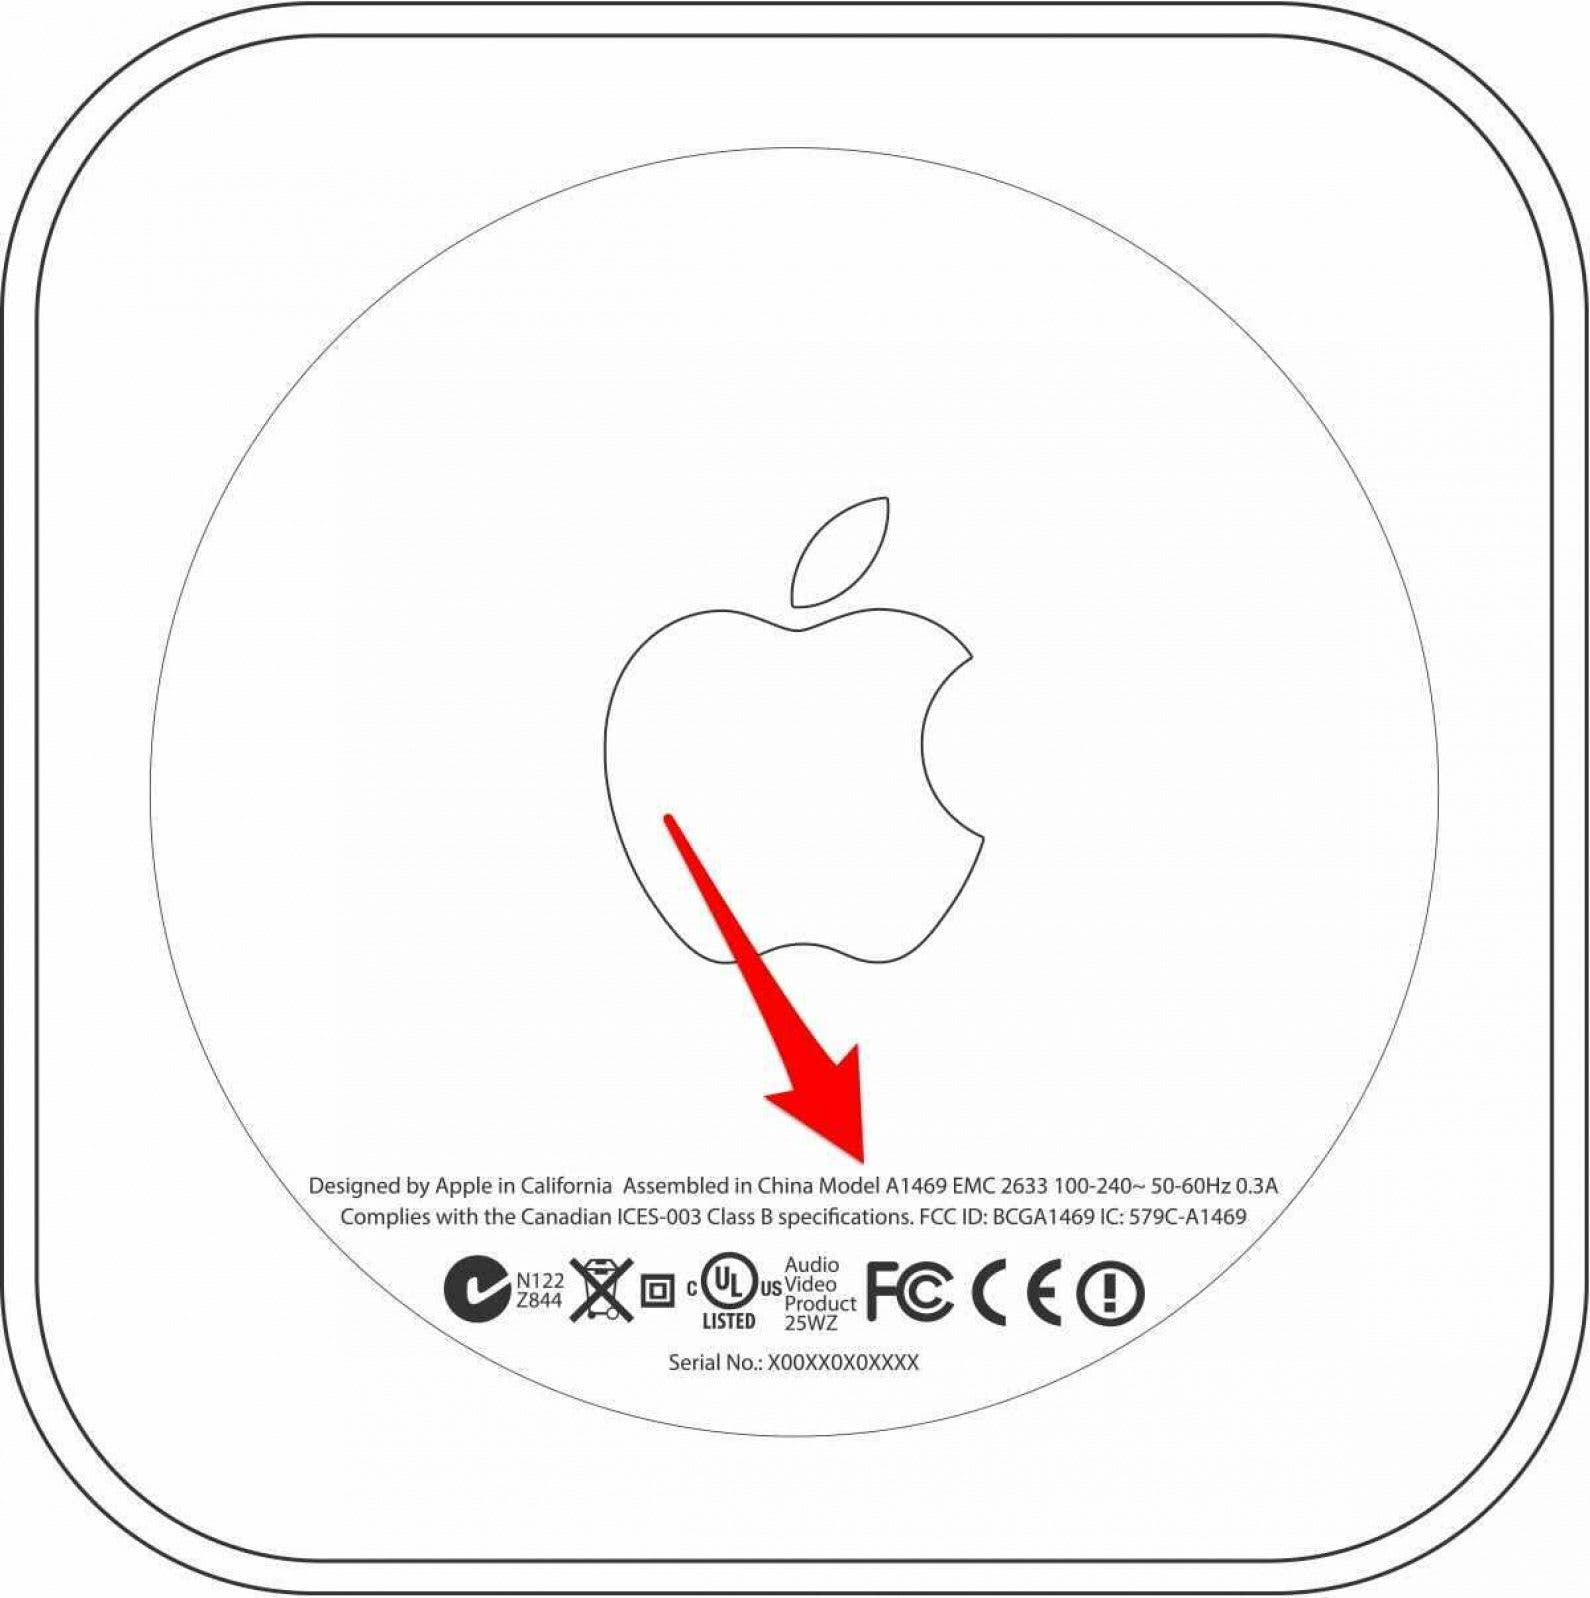 Unteres Etikett des Apple TV-Geräts